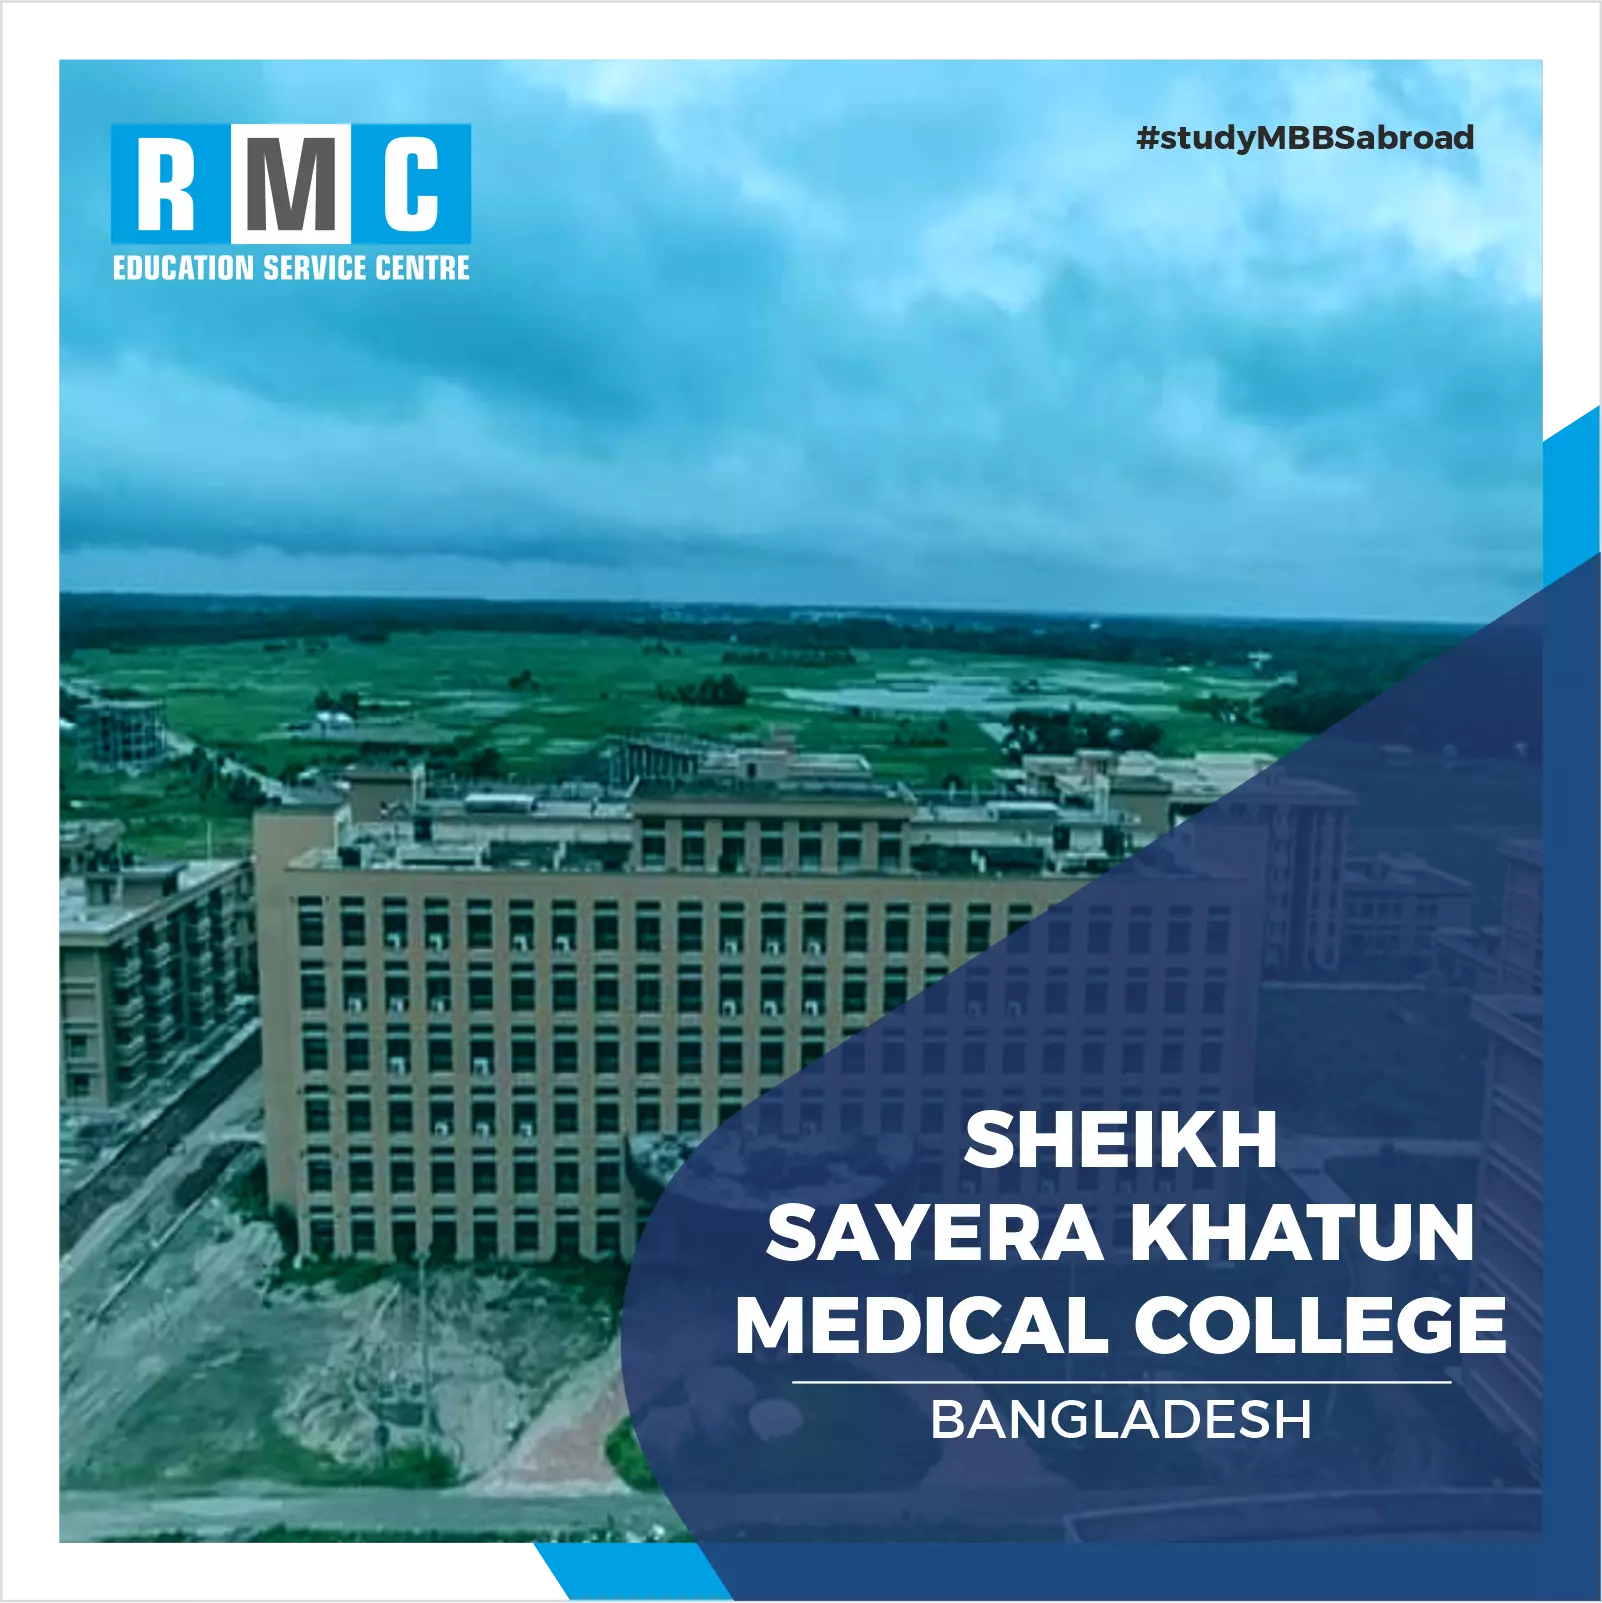 Sheikh Sayera Khatun Medical College